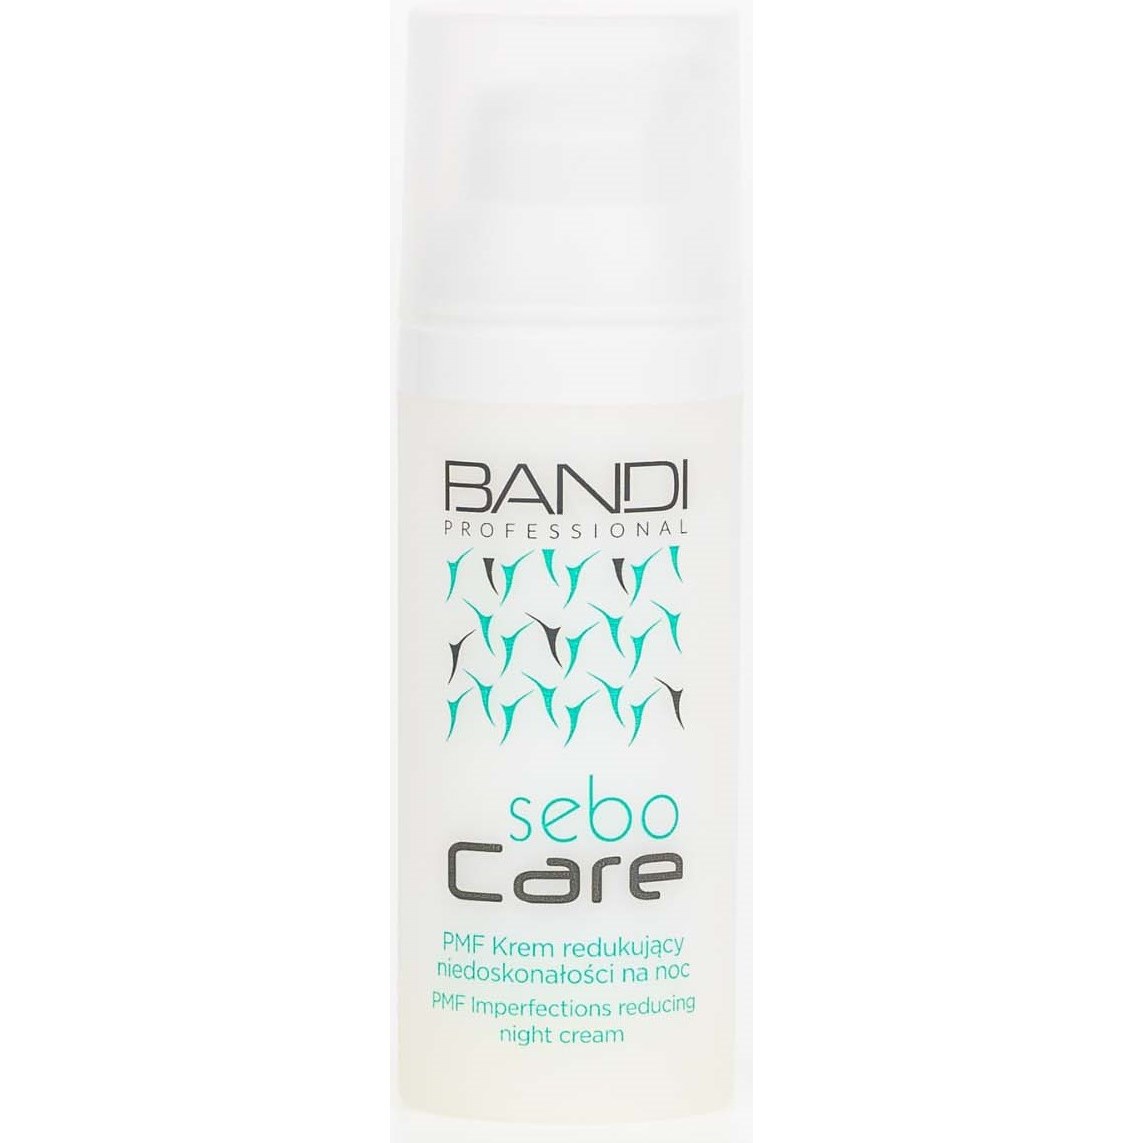 Bandi Sebo Care PMF Imperfections reducing night cream 50 ml